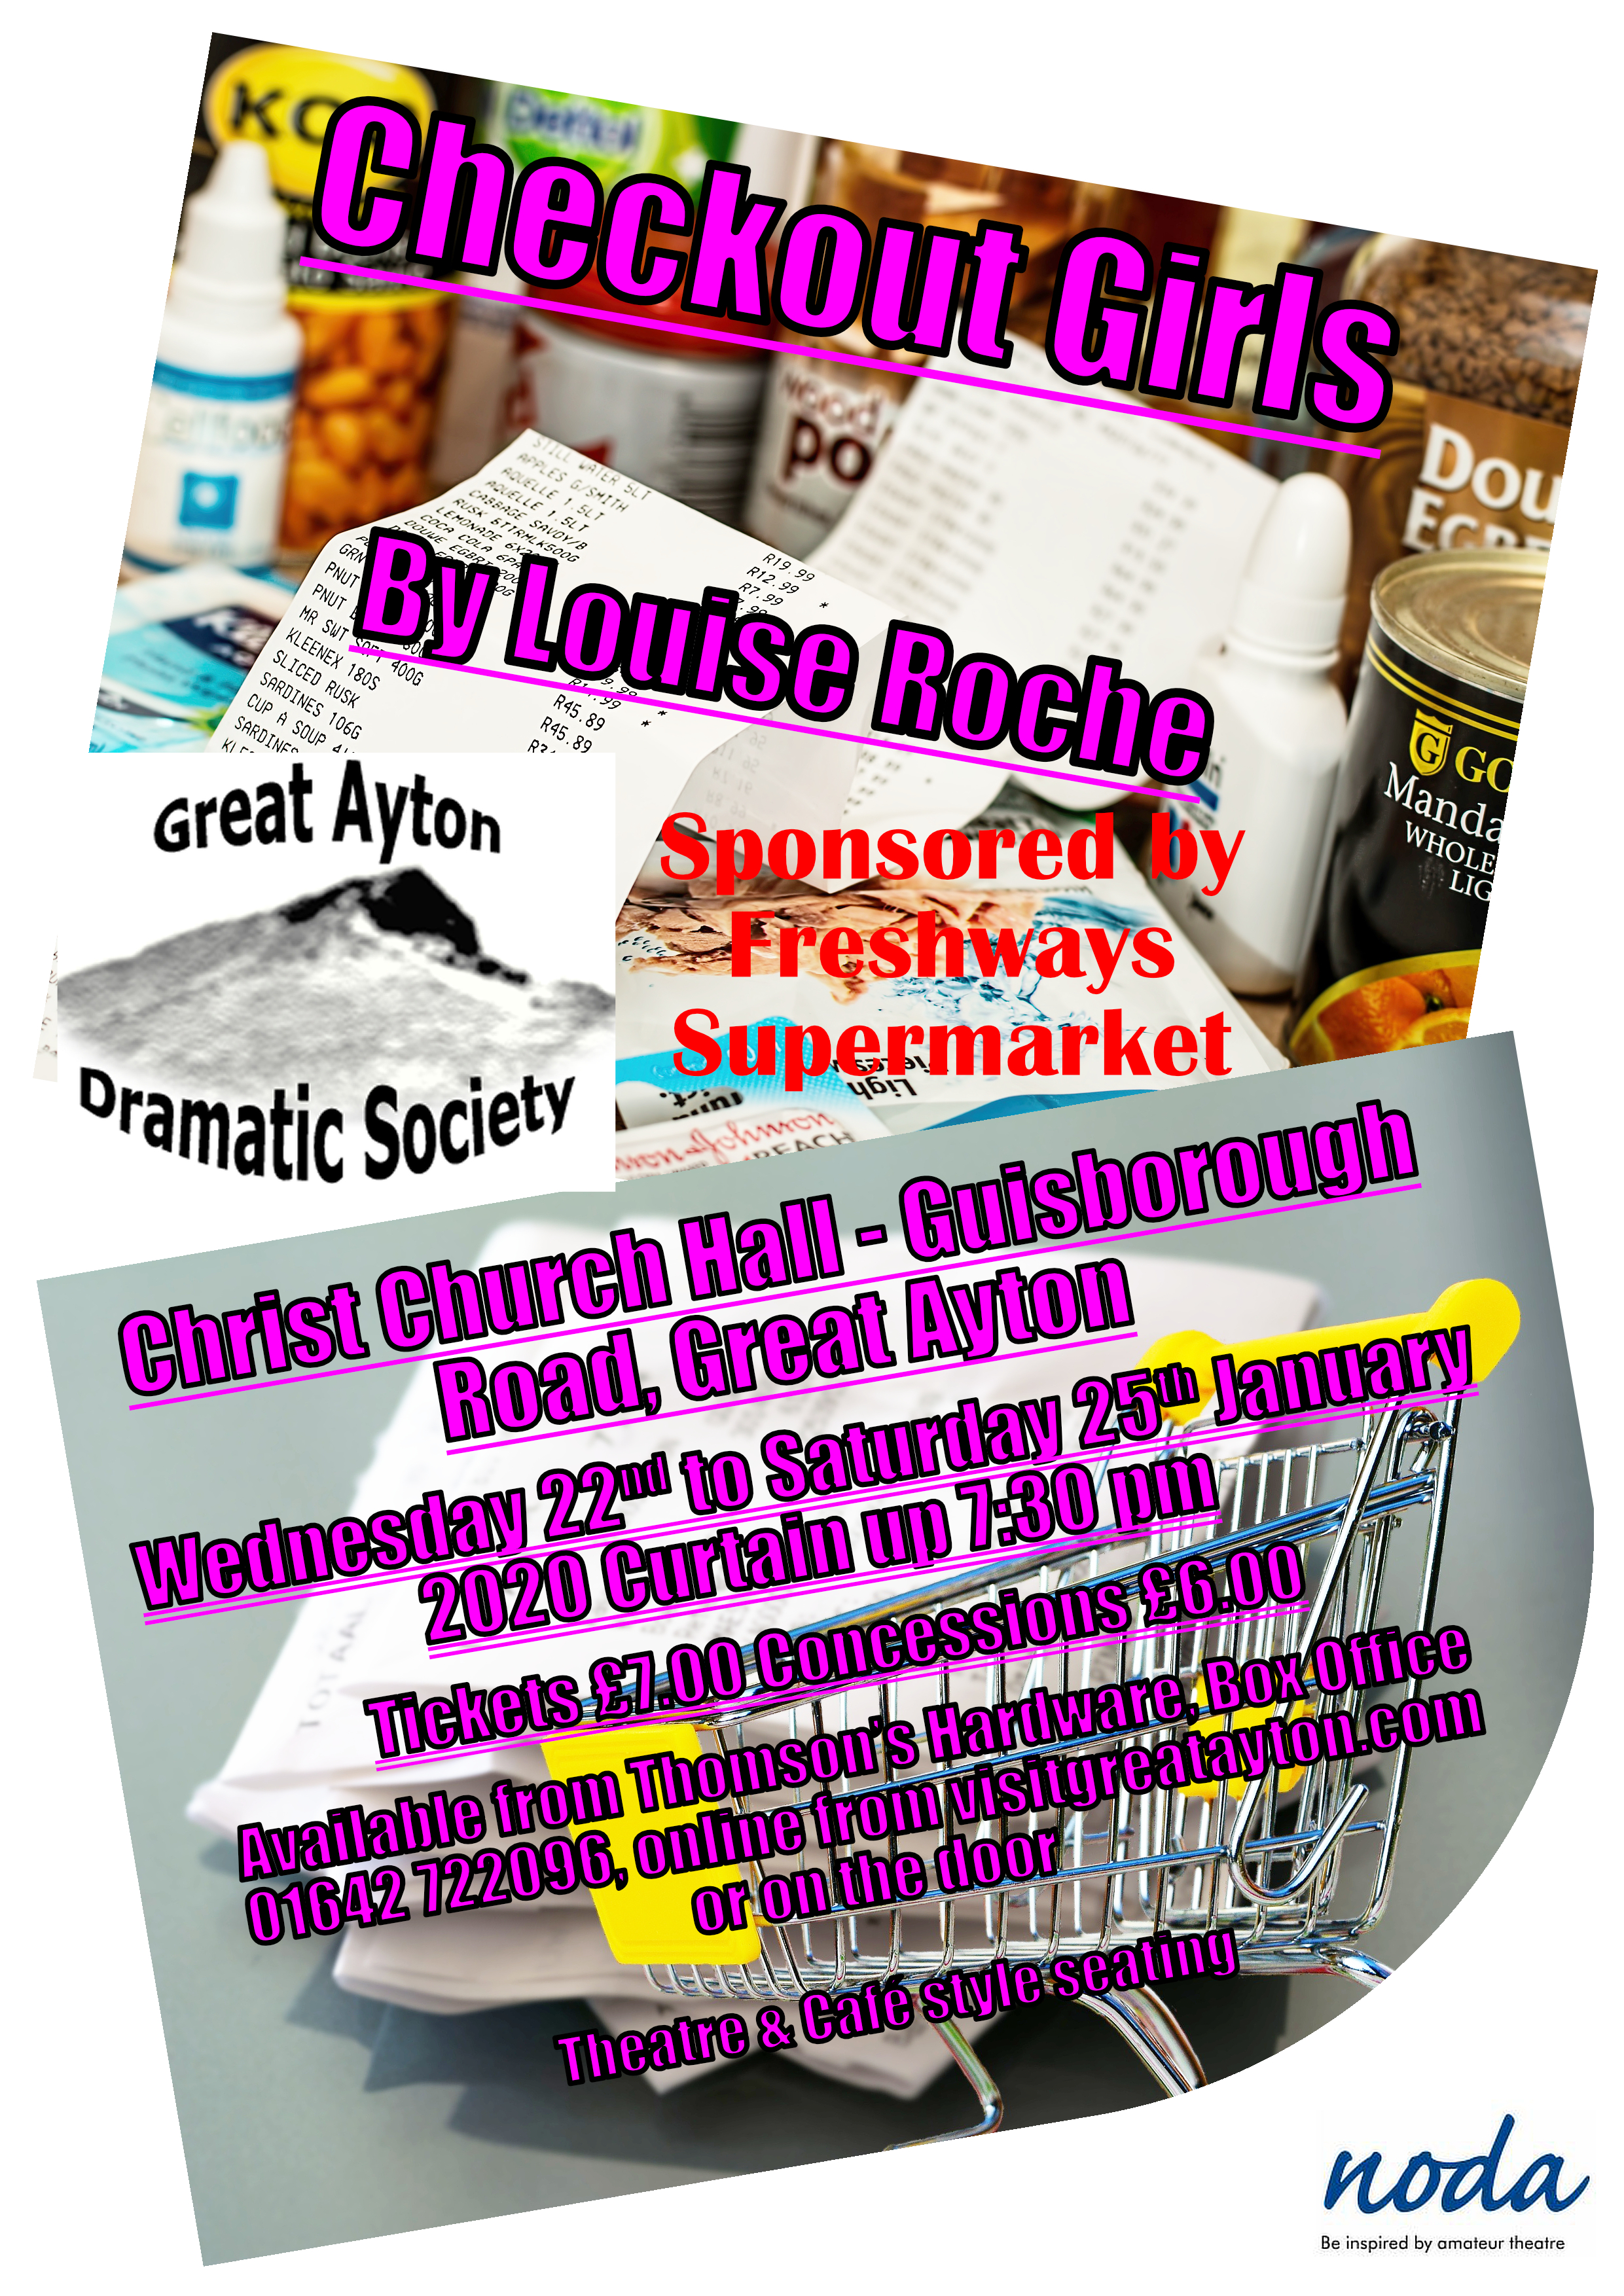 Great Ayton Dramatics Society Checkout Girls promo poster